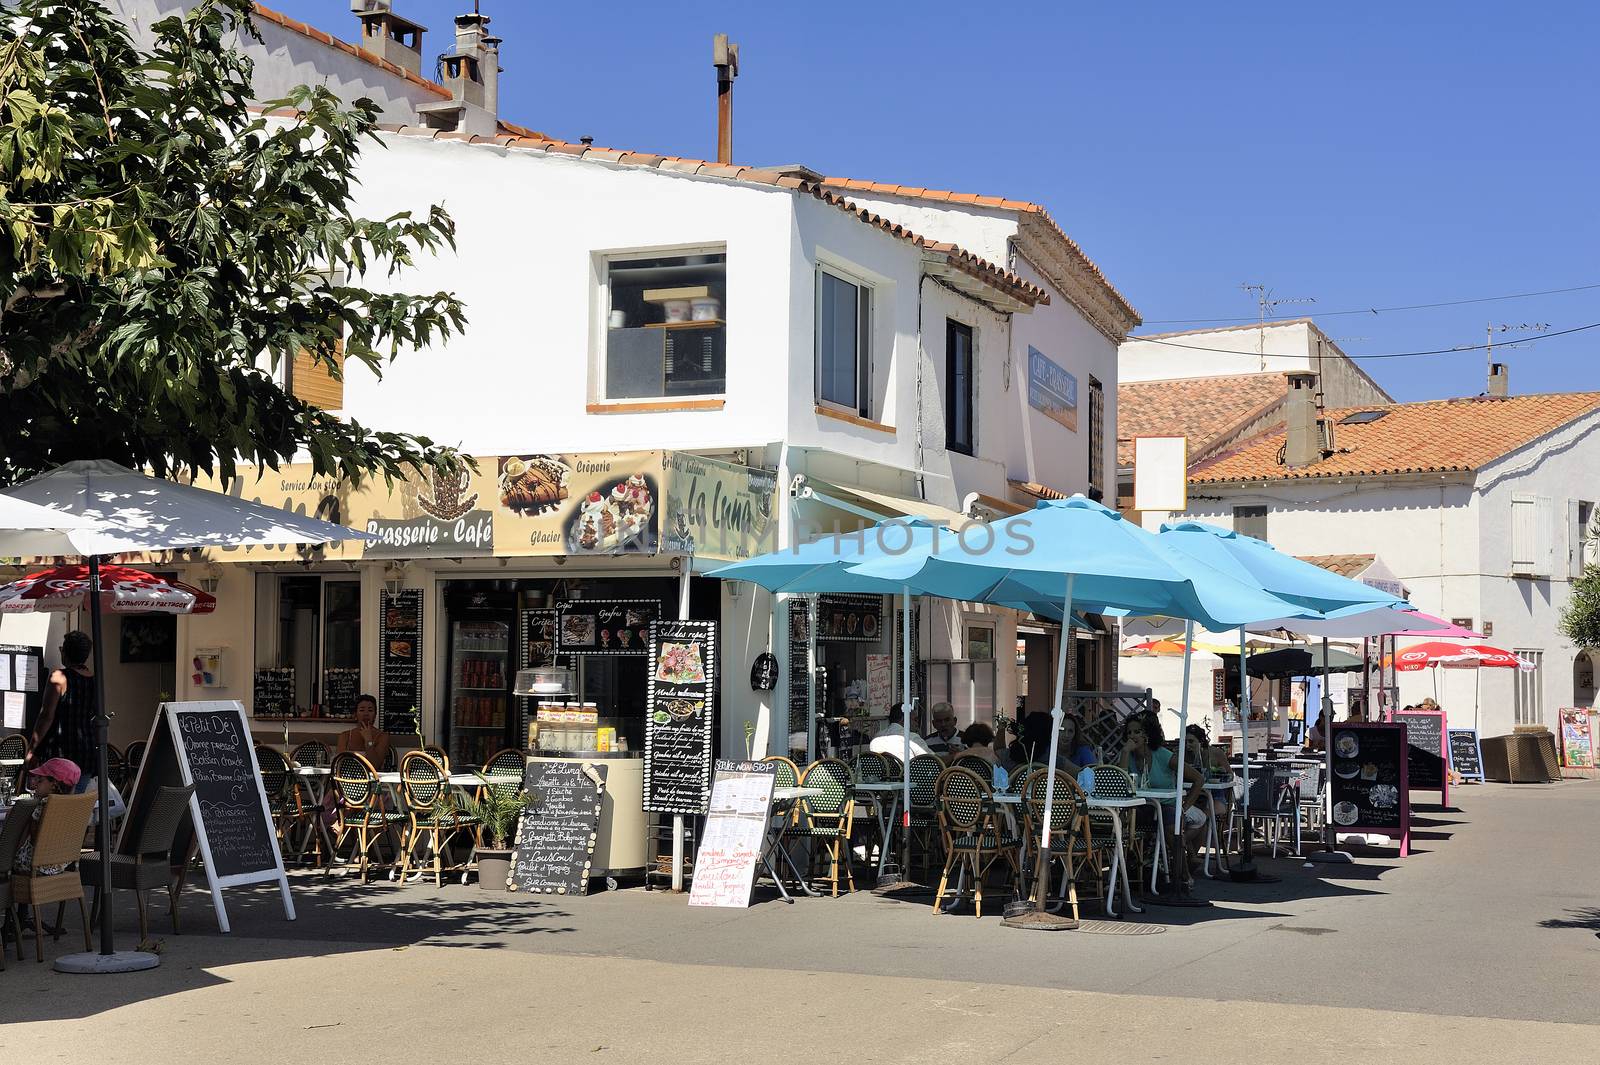 coffee shop in the city center of Saintes-Maries-de-la-Mer in the summer.